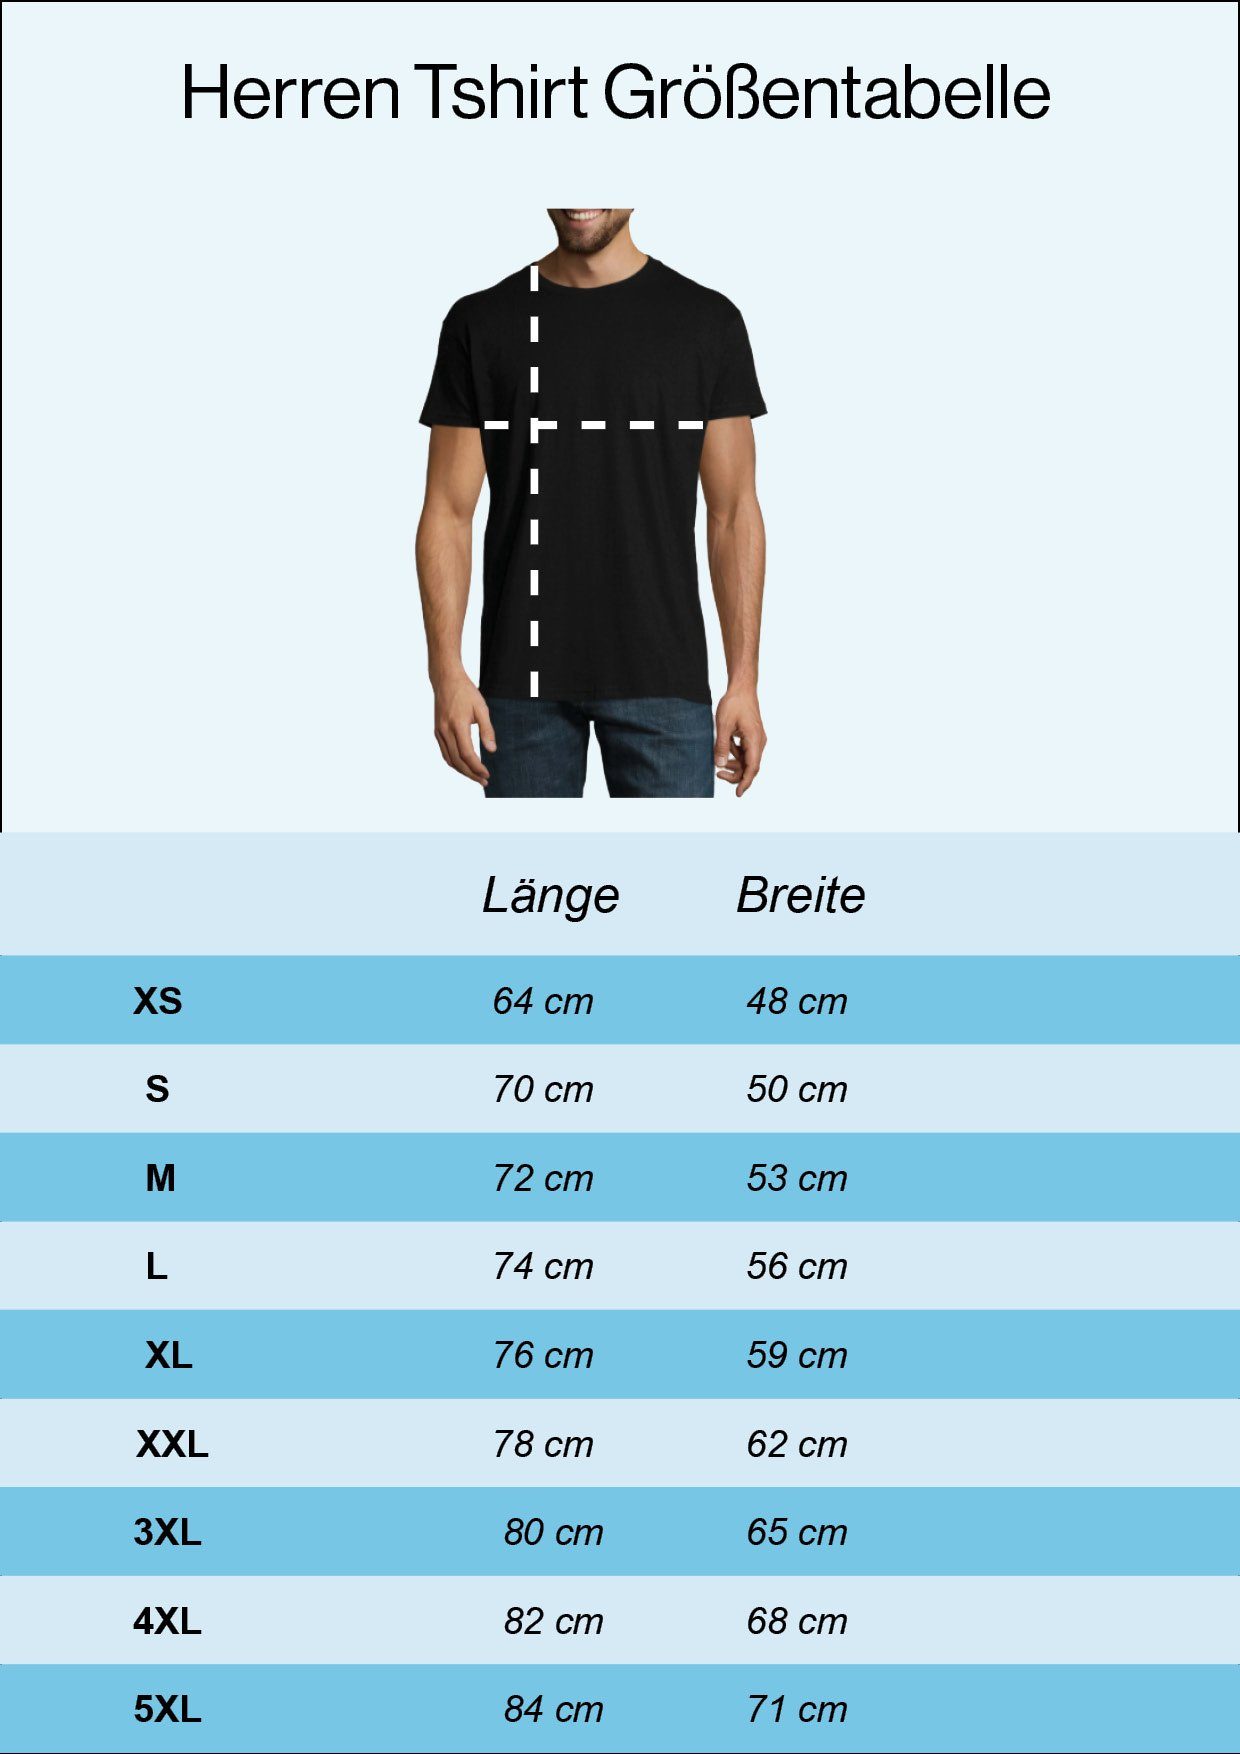 Atari tredigem mit Weiss T-Shirt Frontprint Herren T-Shirt Designz Youth